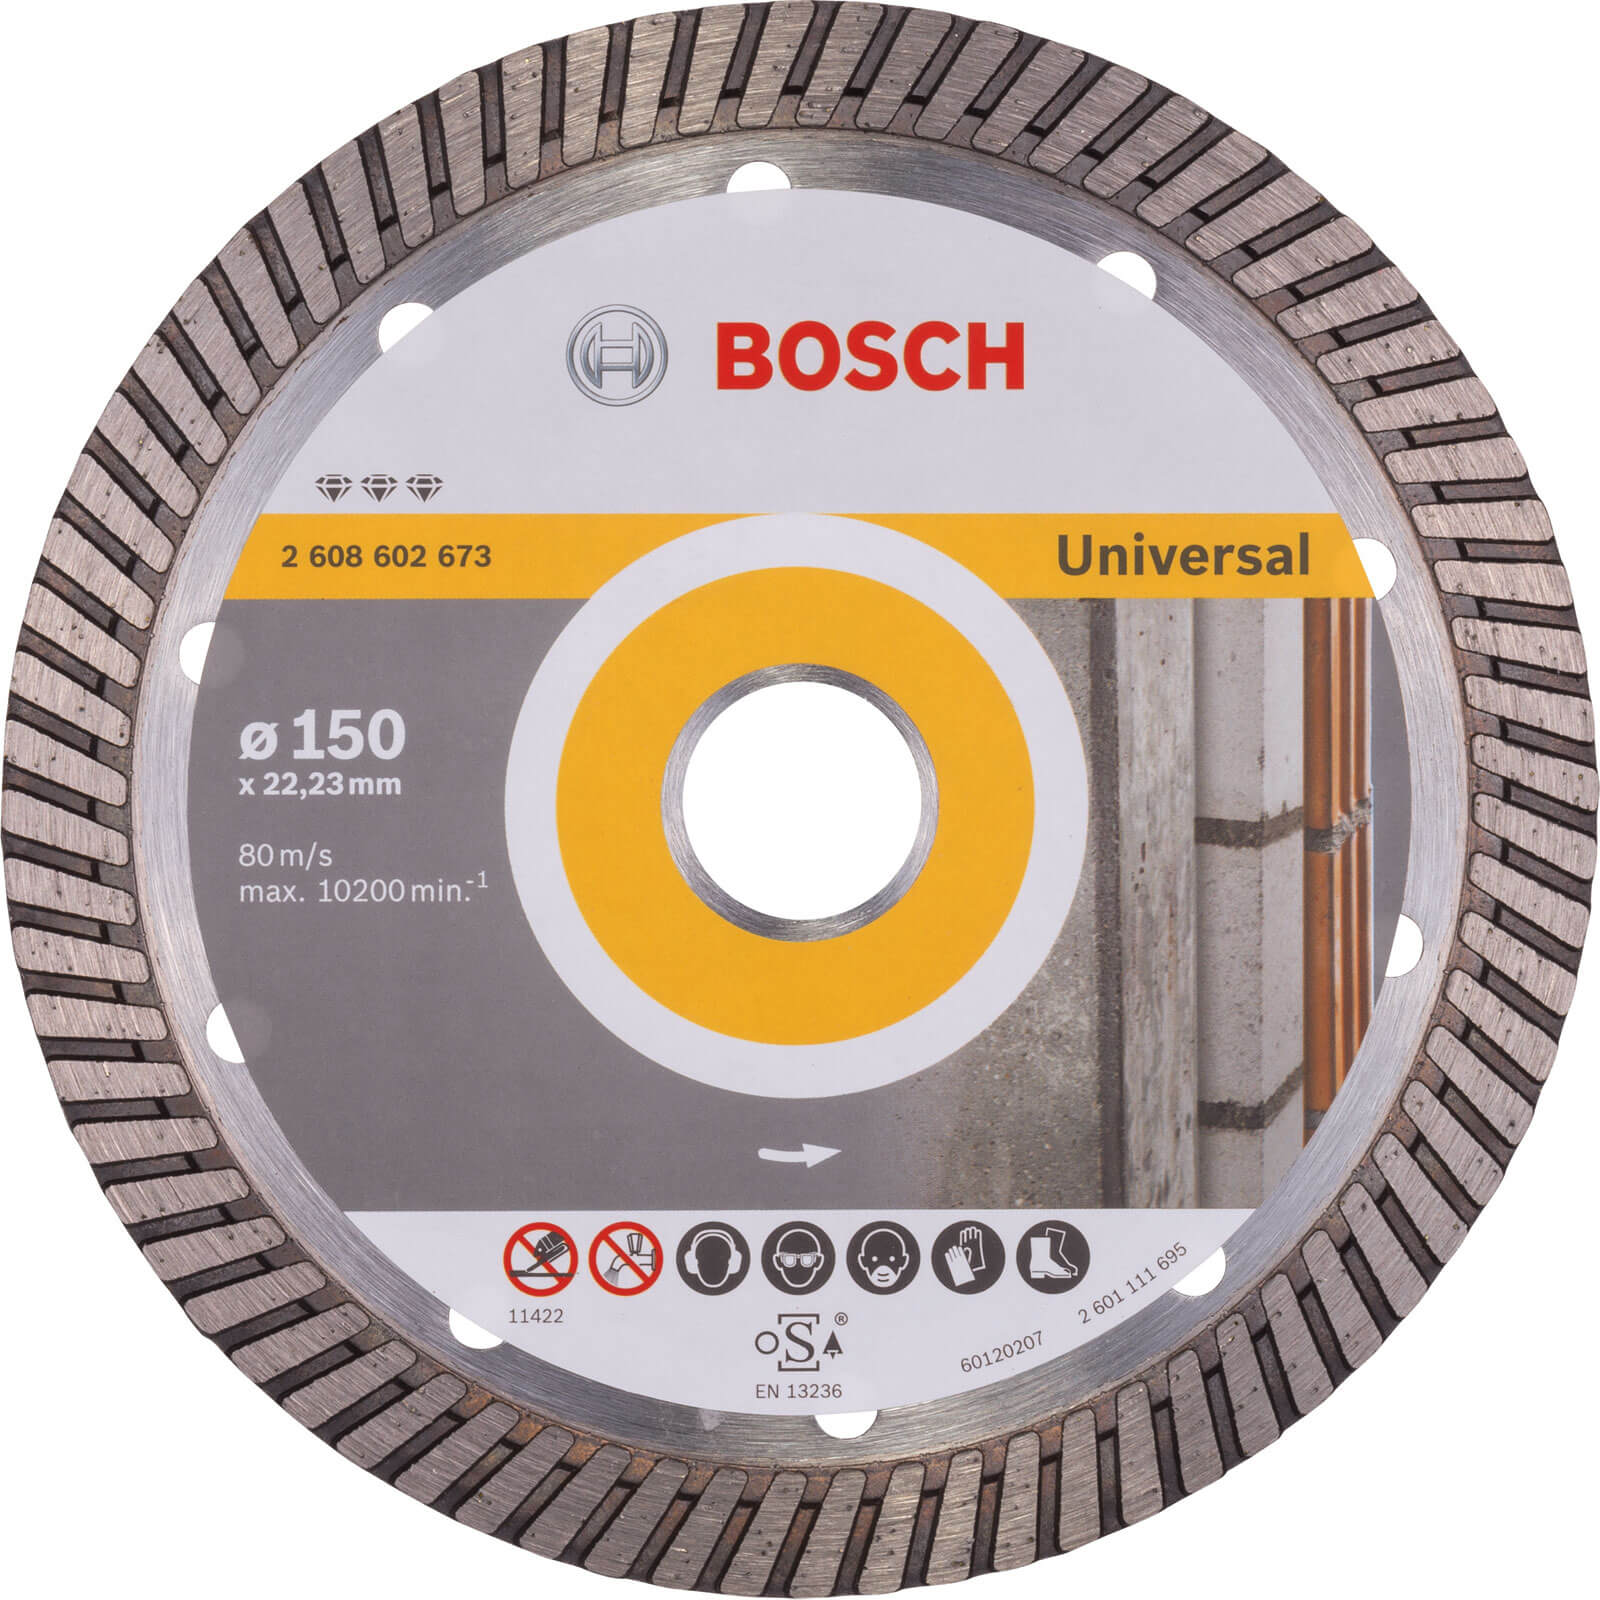 Image of Bosch Turbo Universal Diamond Cutting Disc 150mm